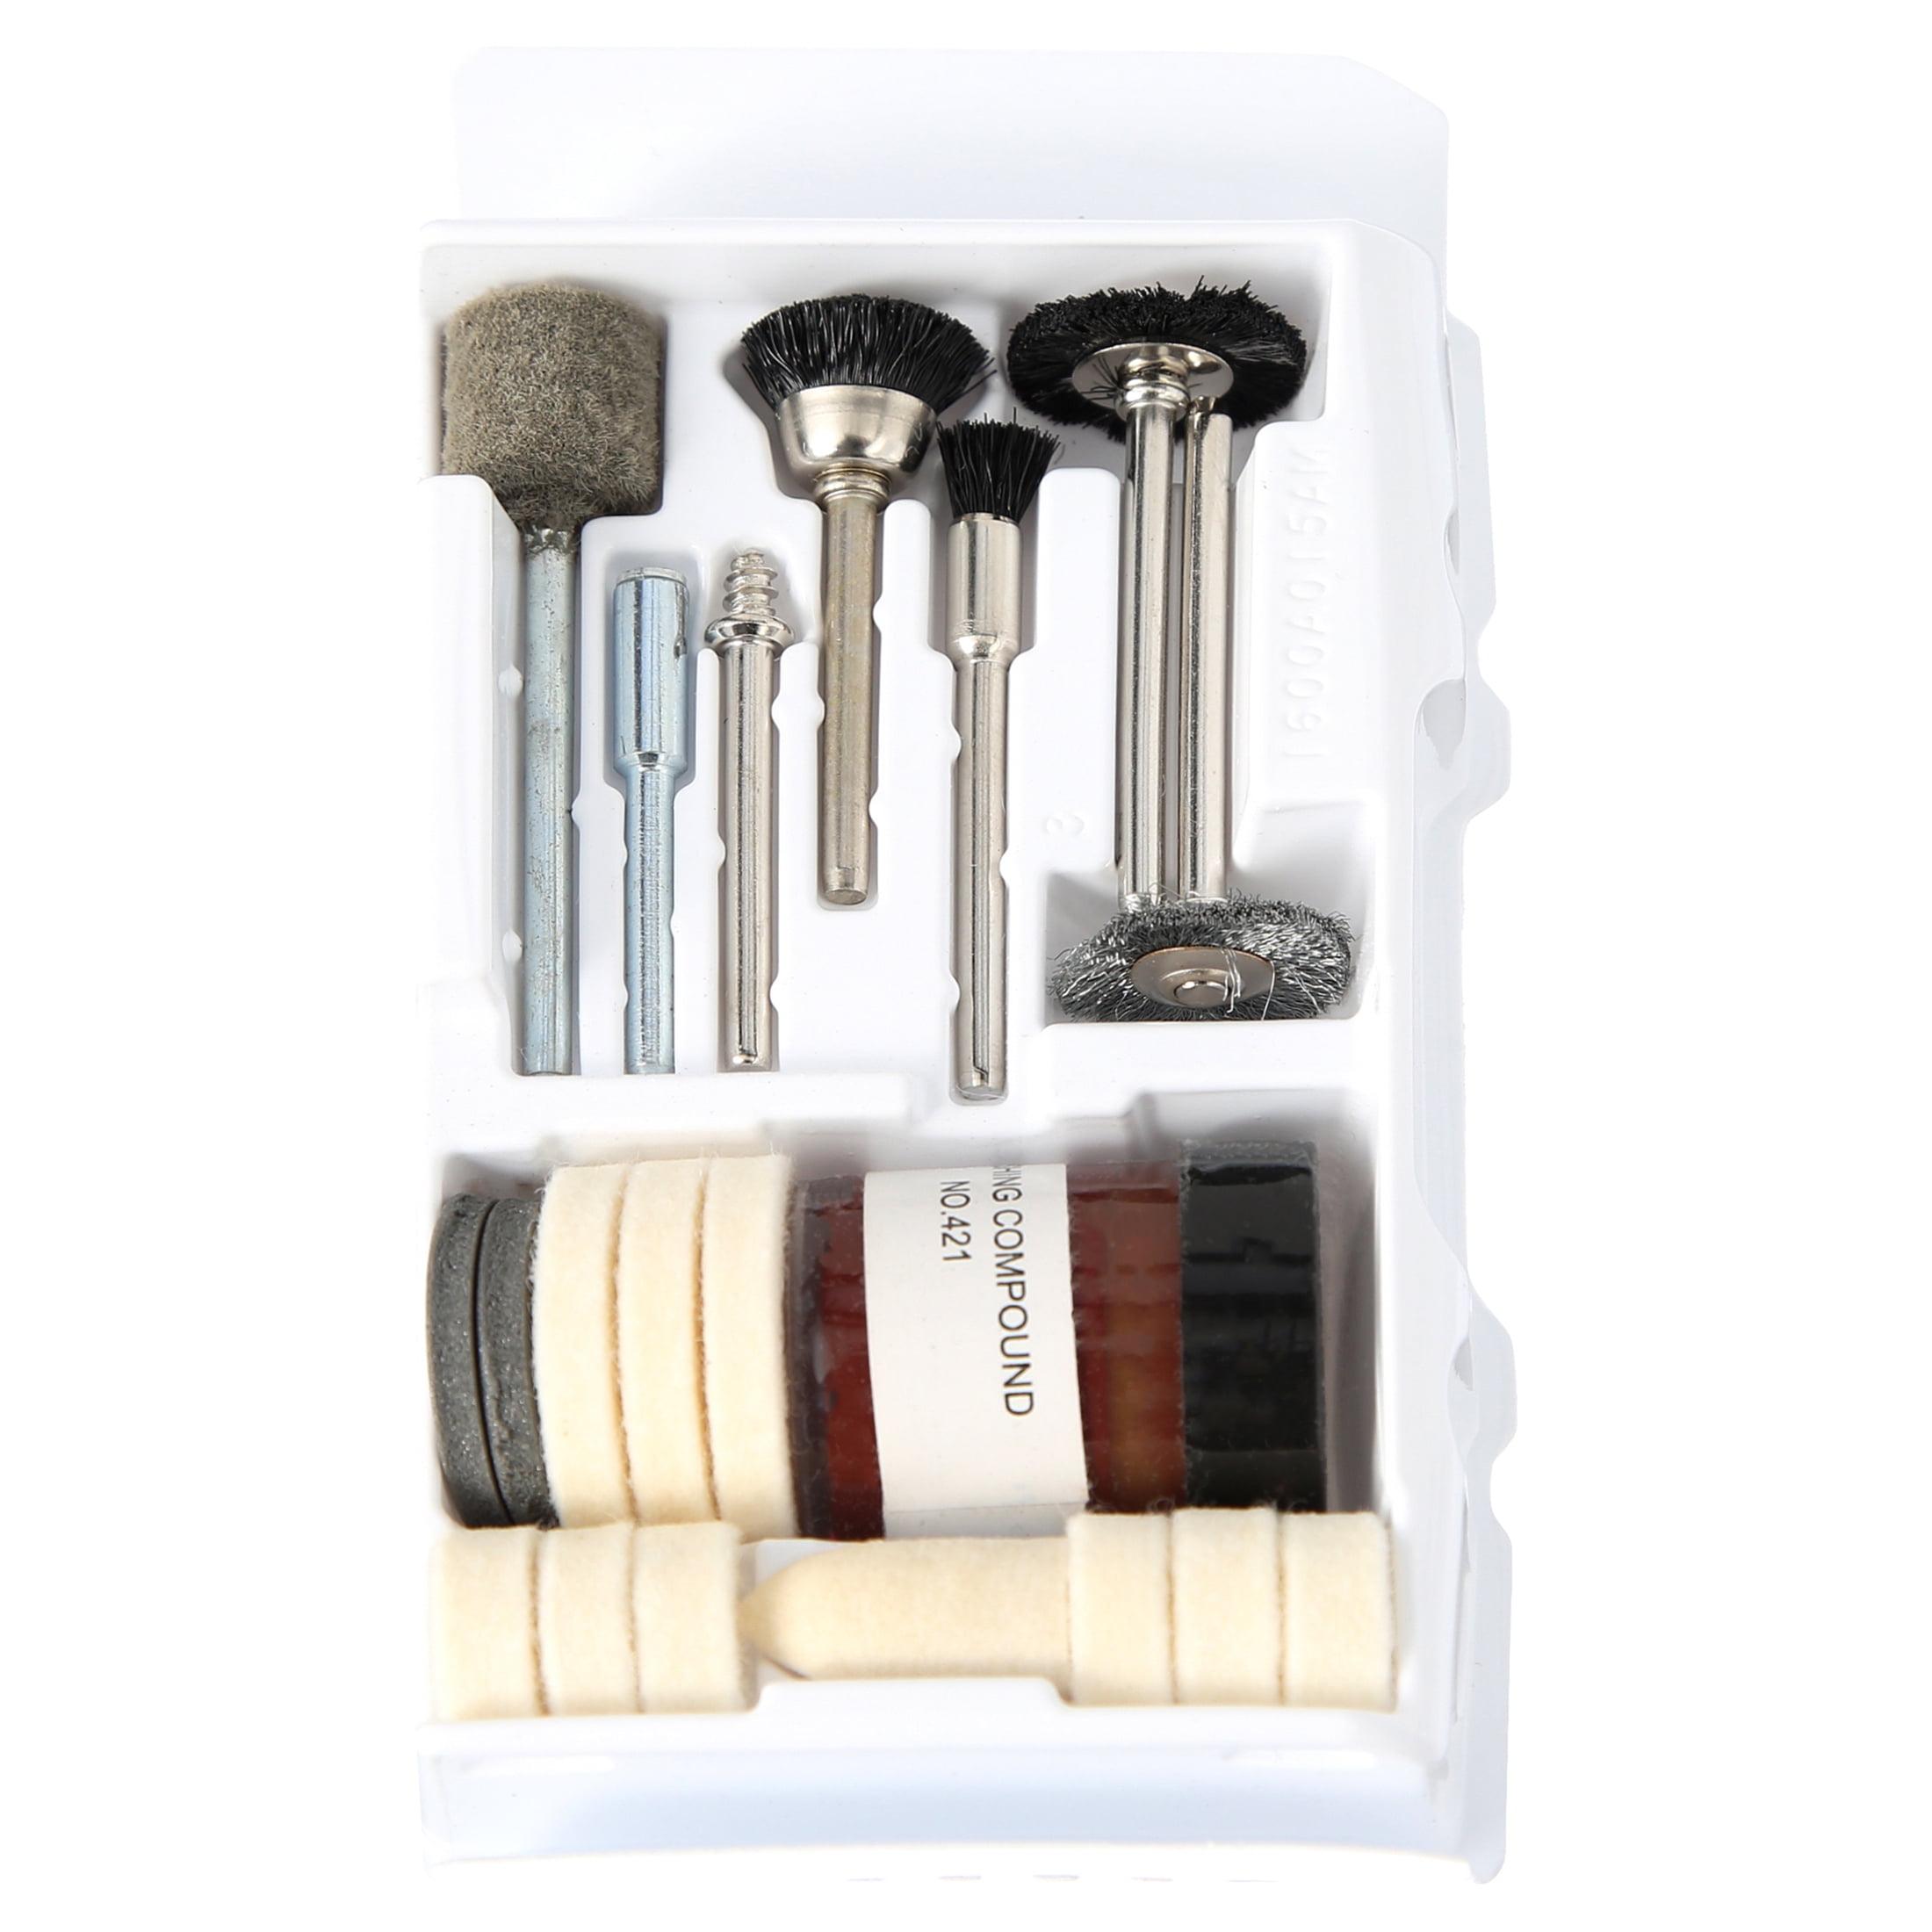 rotary tool kit,Jewelry/watch polishing kit,Polishing Motor with